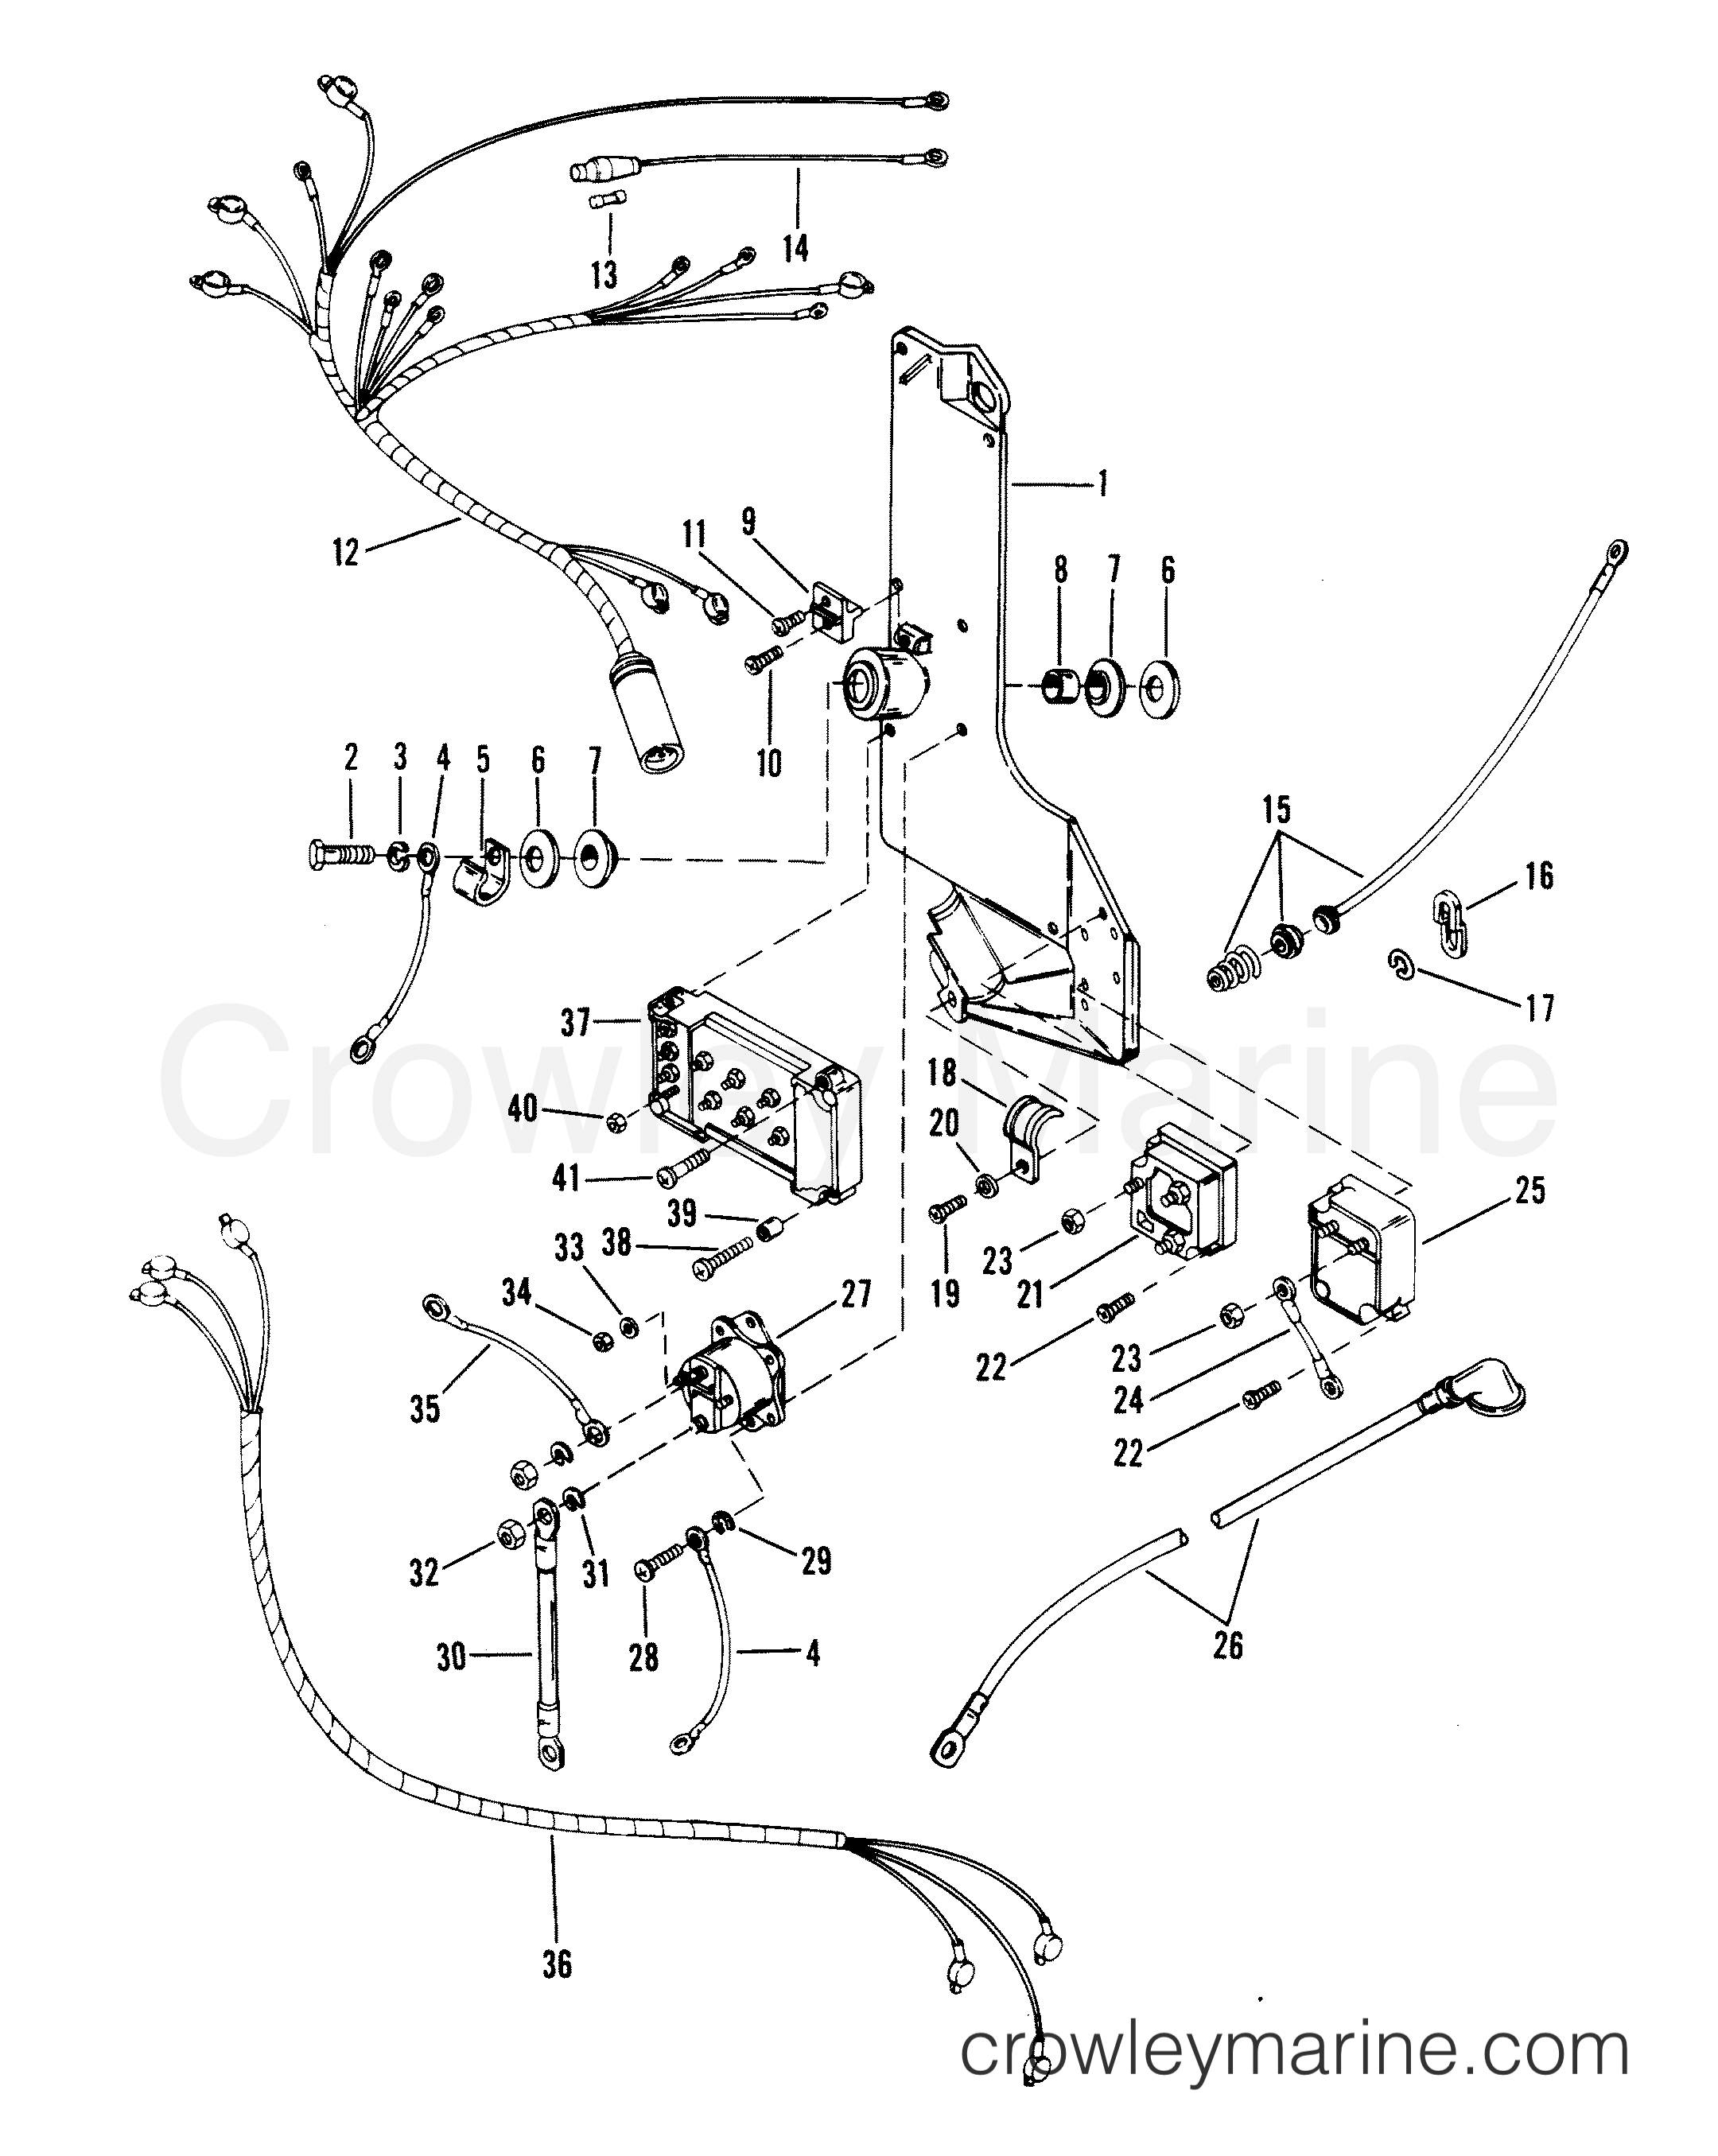 Wiring Harness, Starter Solenoid And Rectifier - Serial Range - Mercury Outboard Rectifier Wiring Diagram